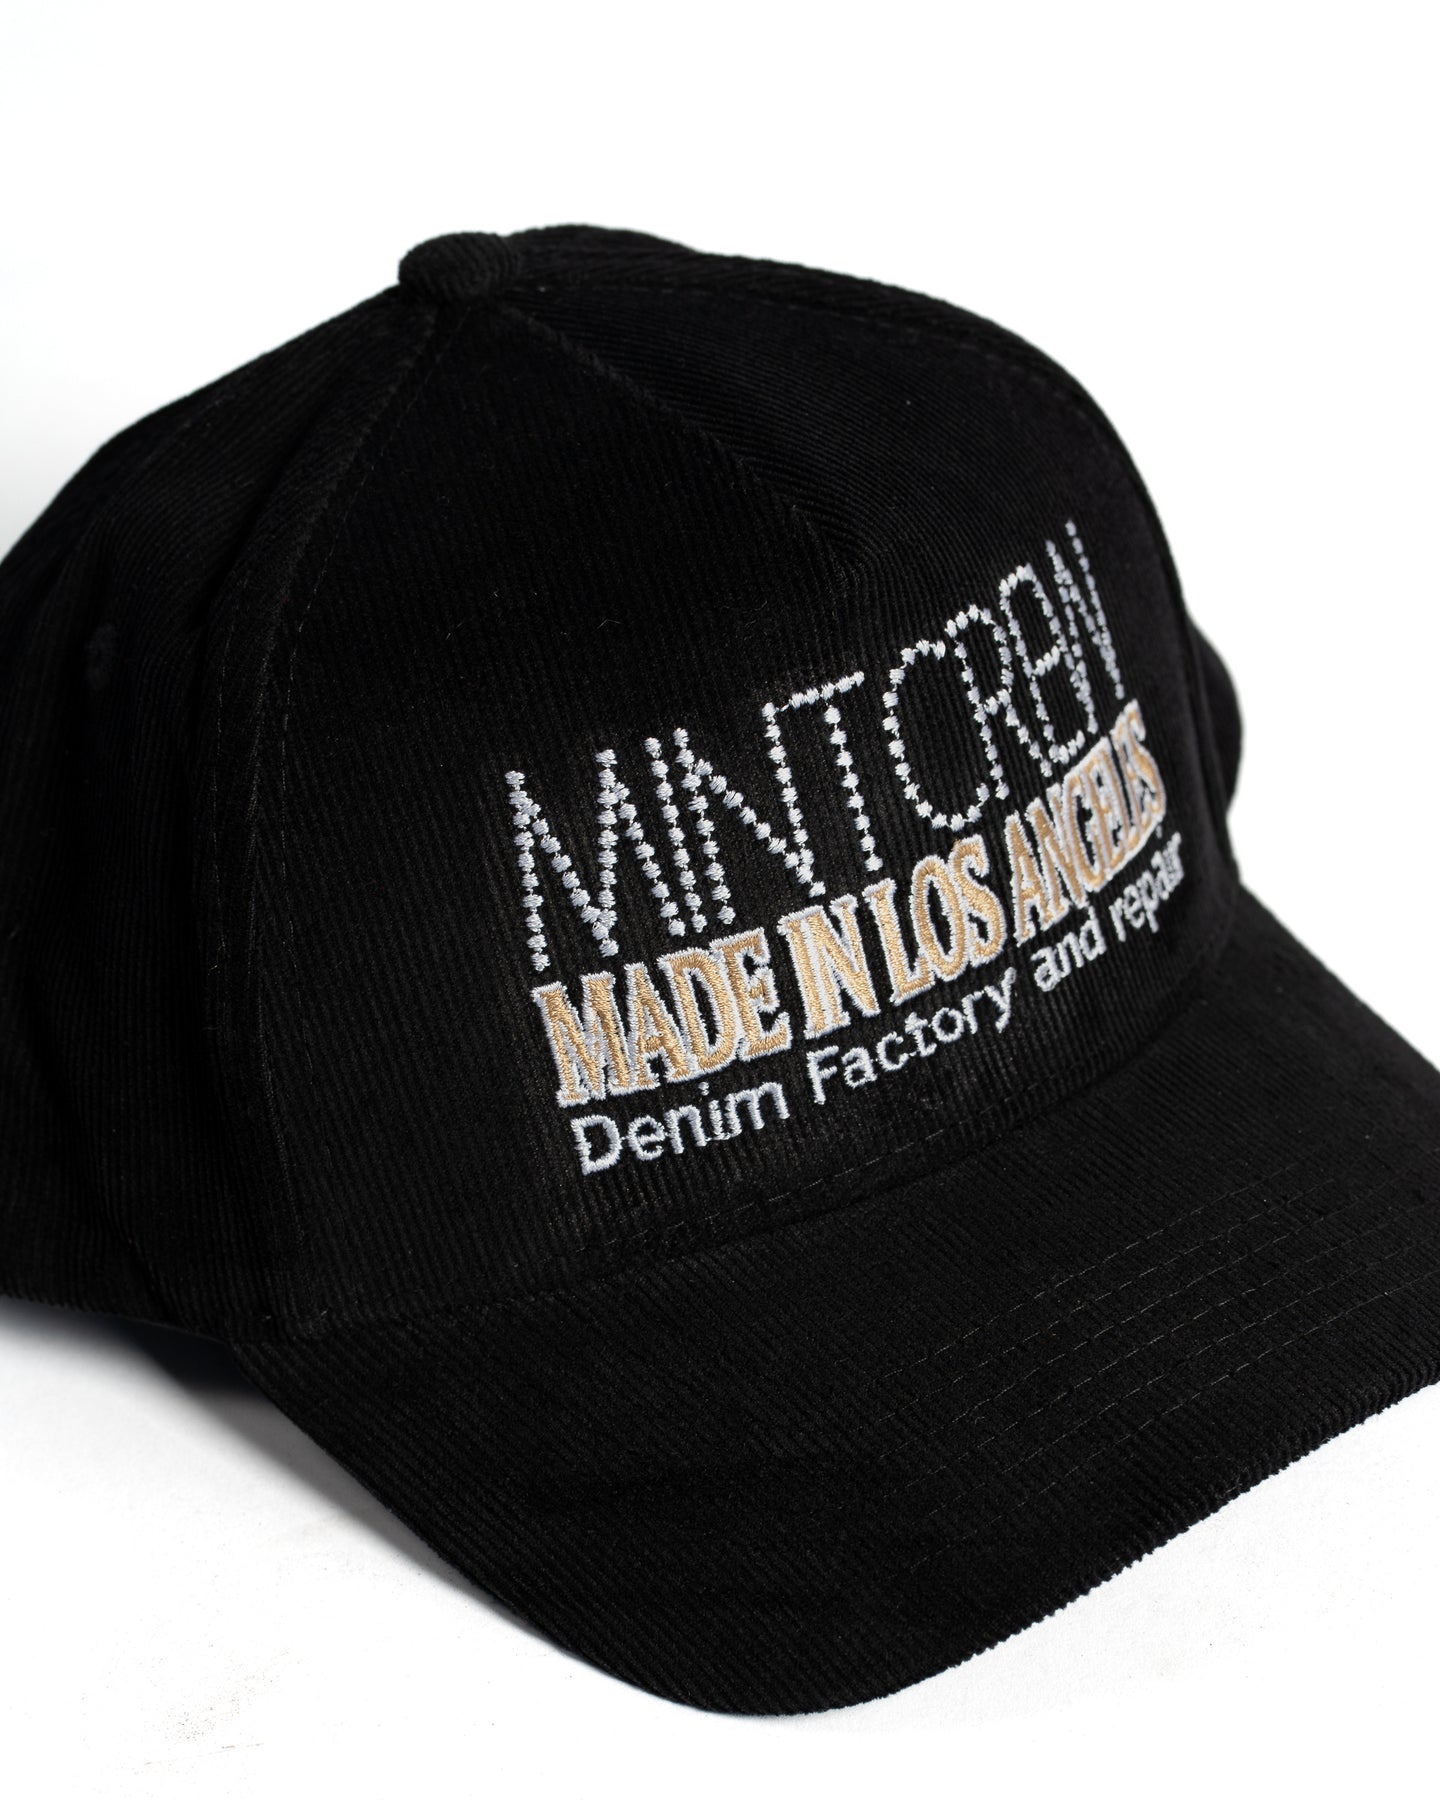 MINTCREW DENIM FACTORY CAP (CORDUROY BLACK)